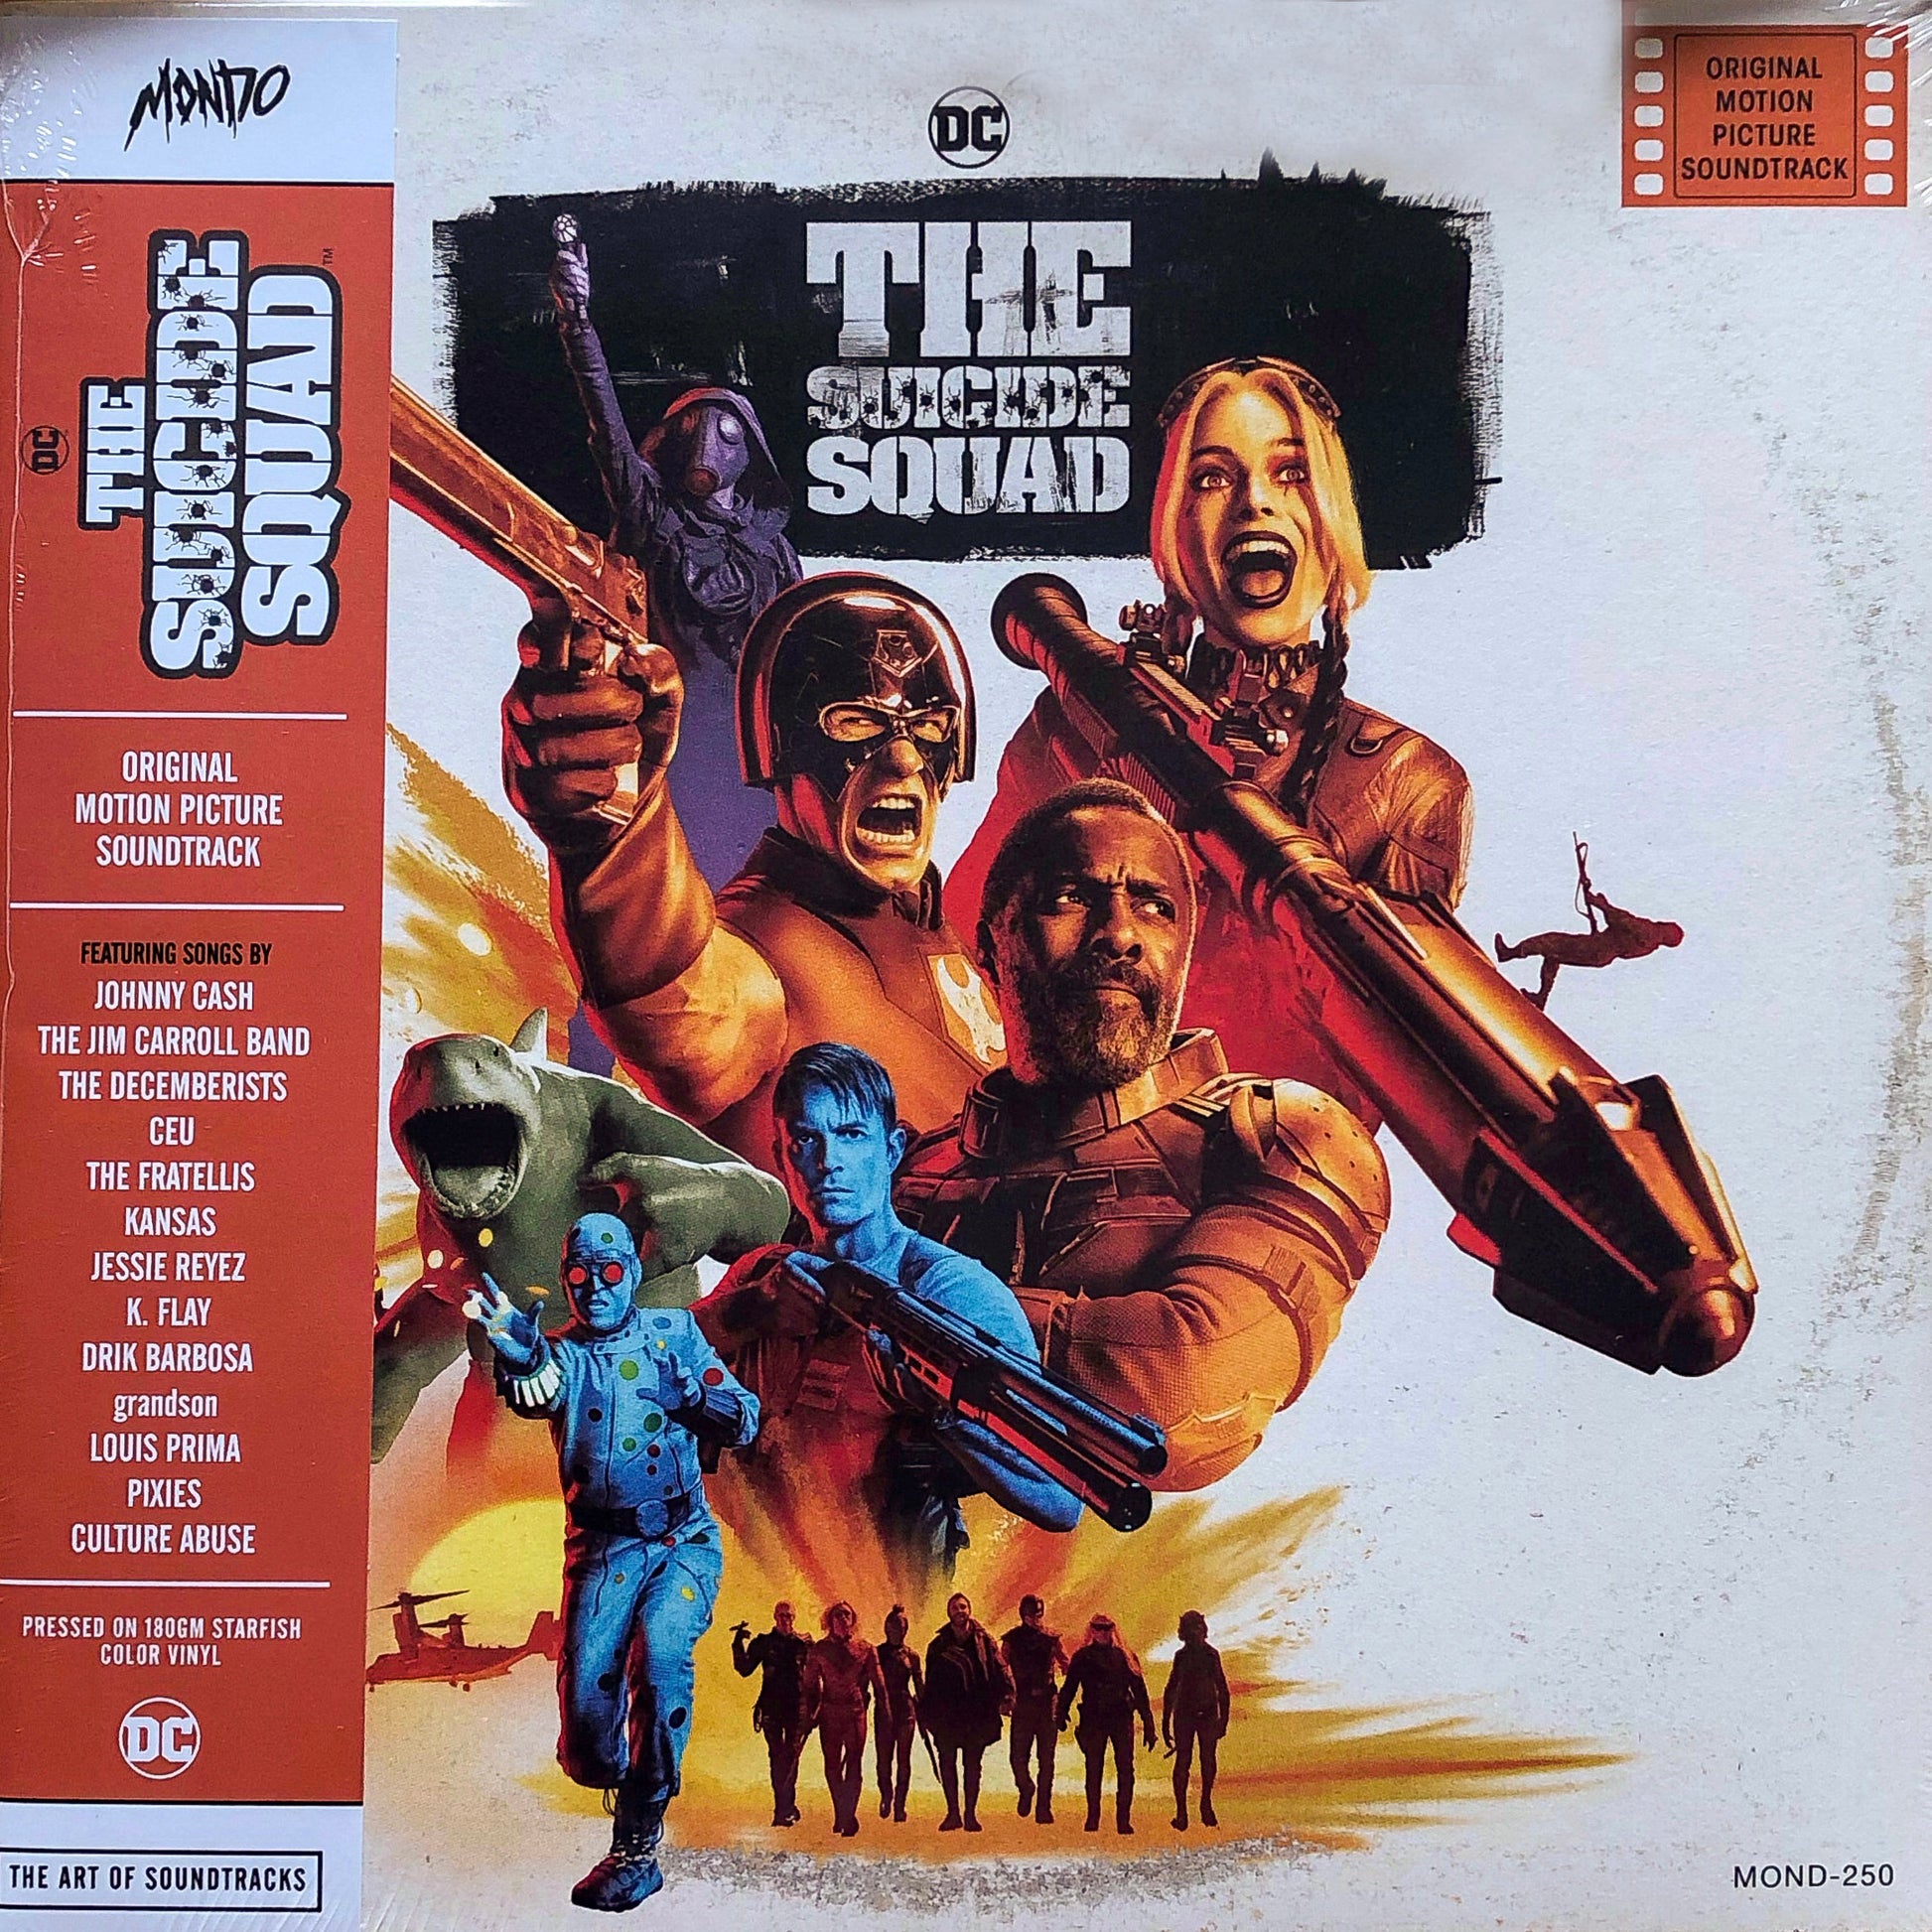 Suicide Squad: The Album - Album by Various Artists - Apple Music